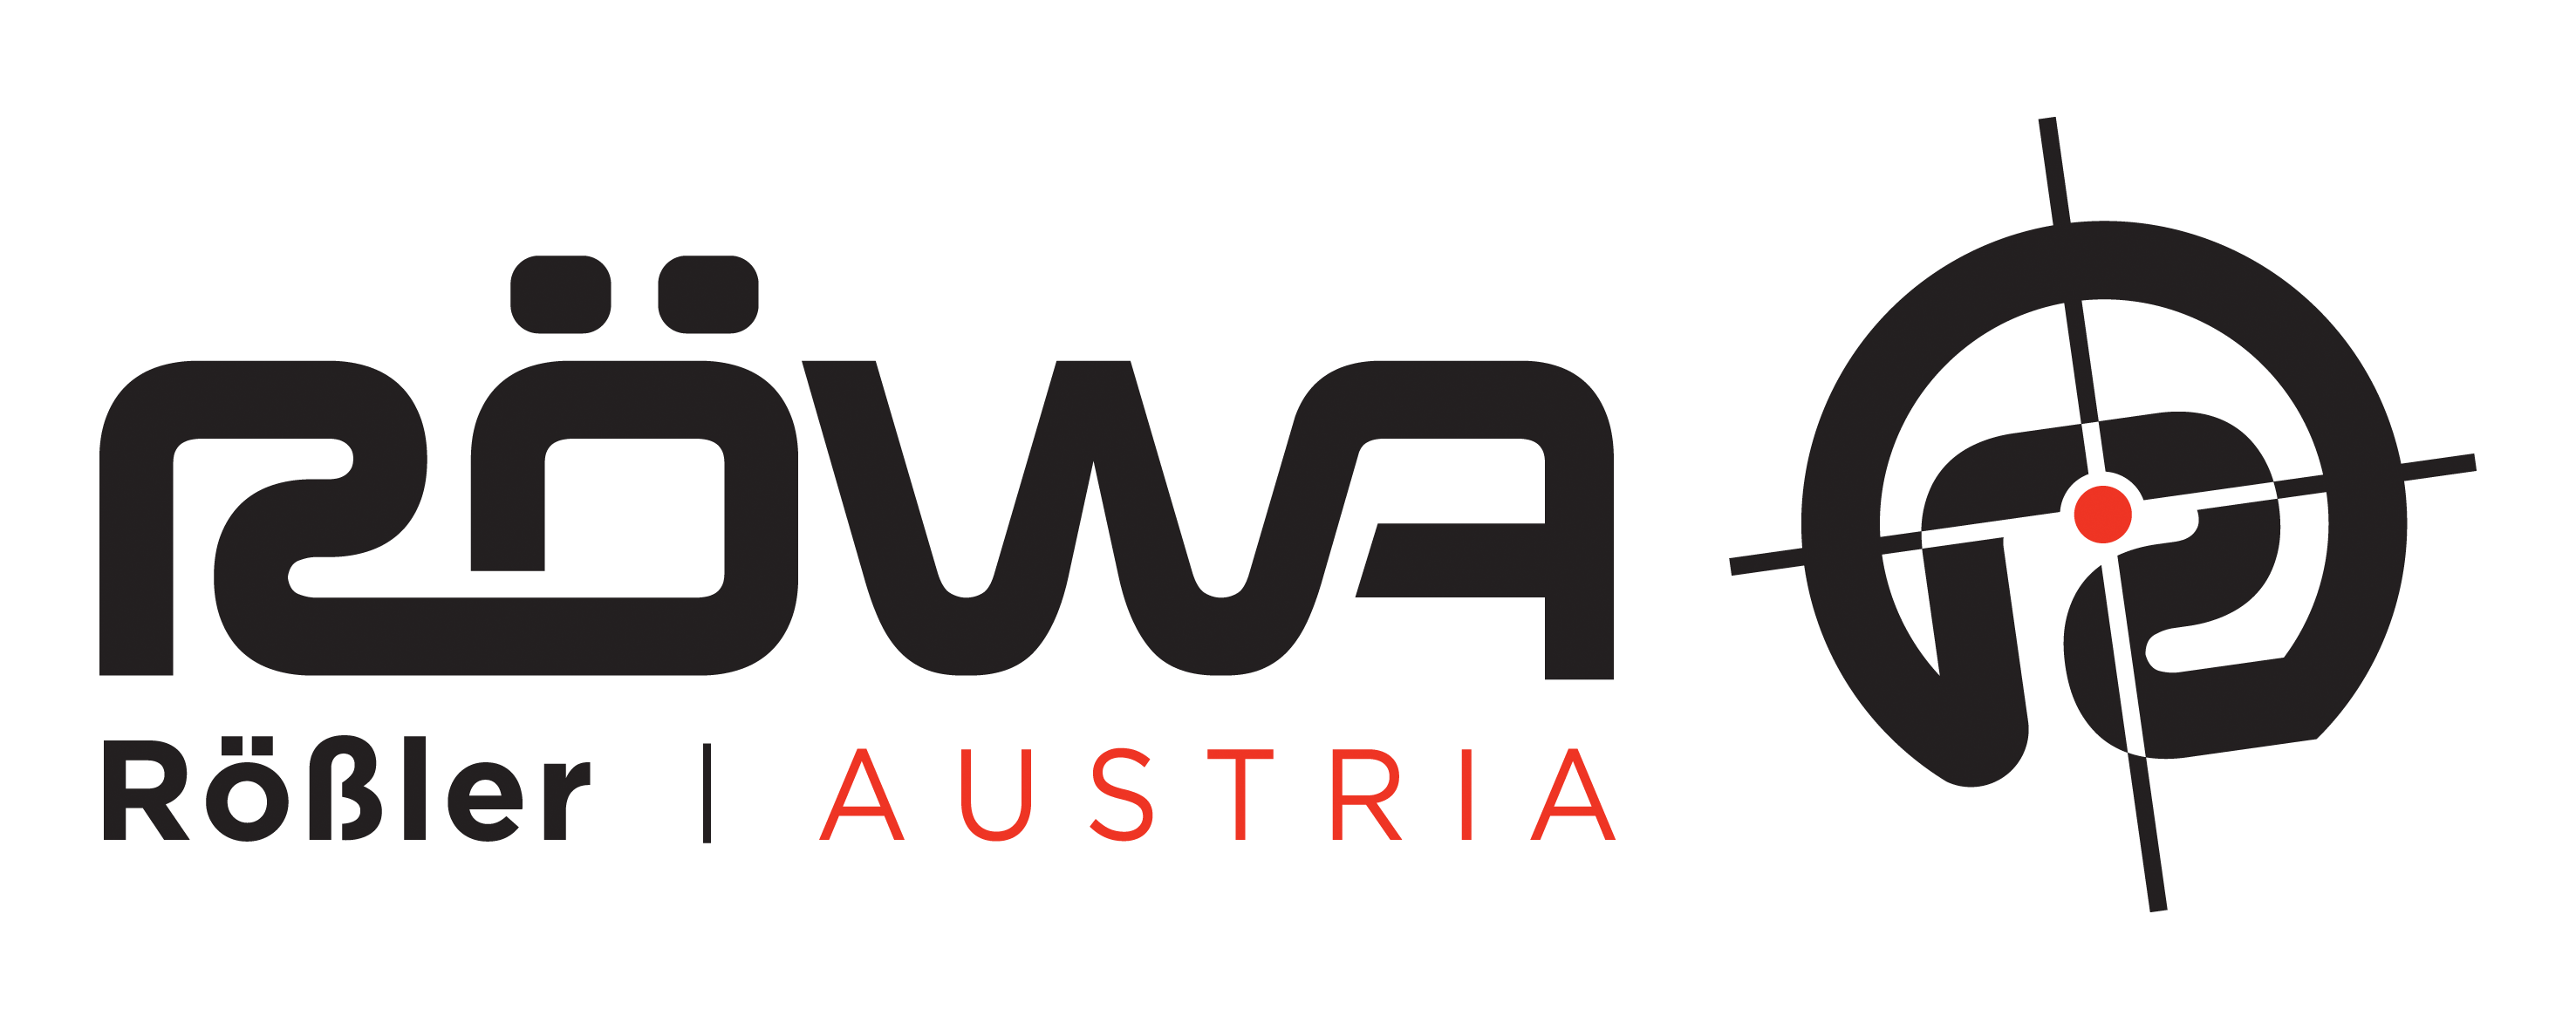 Jaktrifler - Röwa Rößler Austria